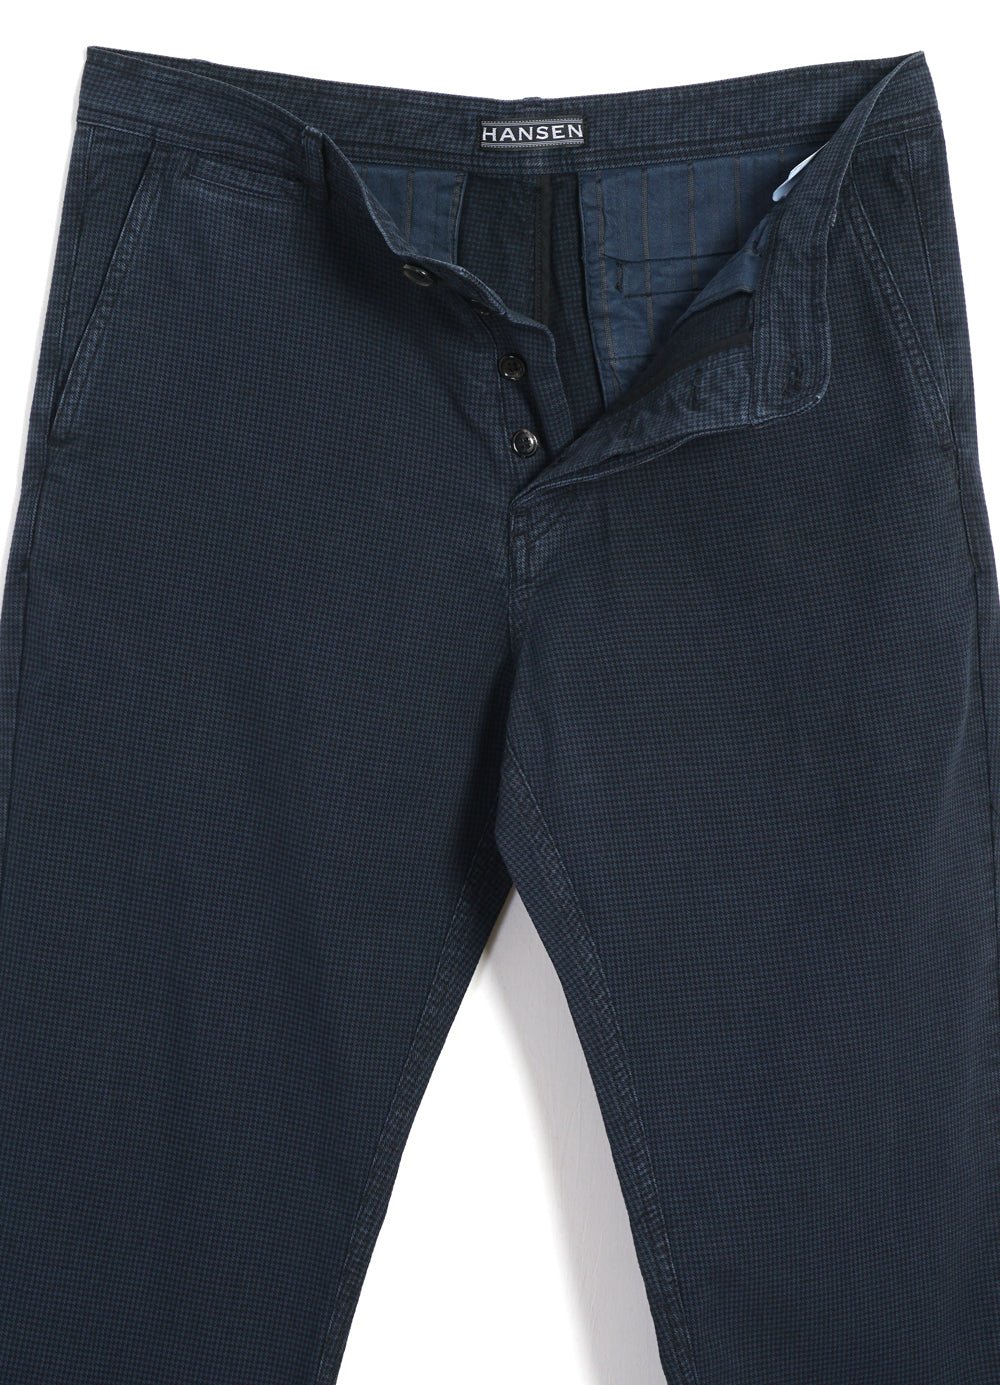 HANSEN GARMENTS - FRED | Regular Cut Work Trousers | Black Navy - HANSEN Garments